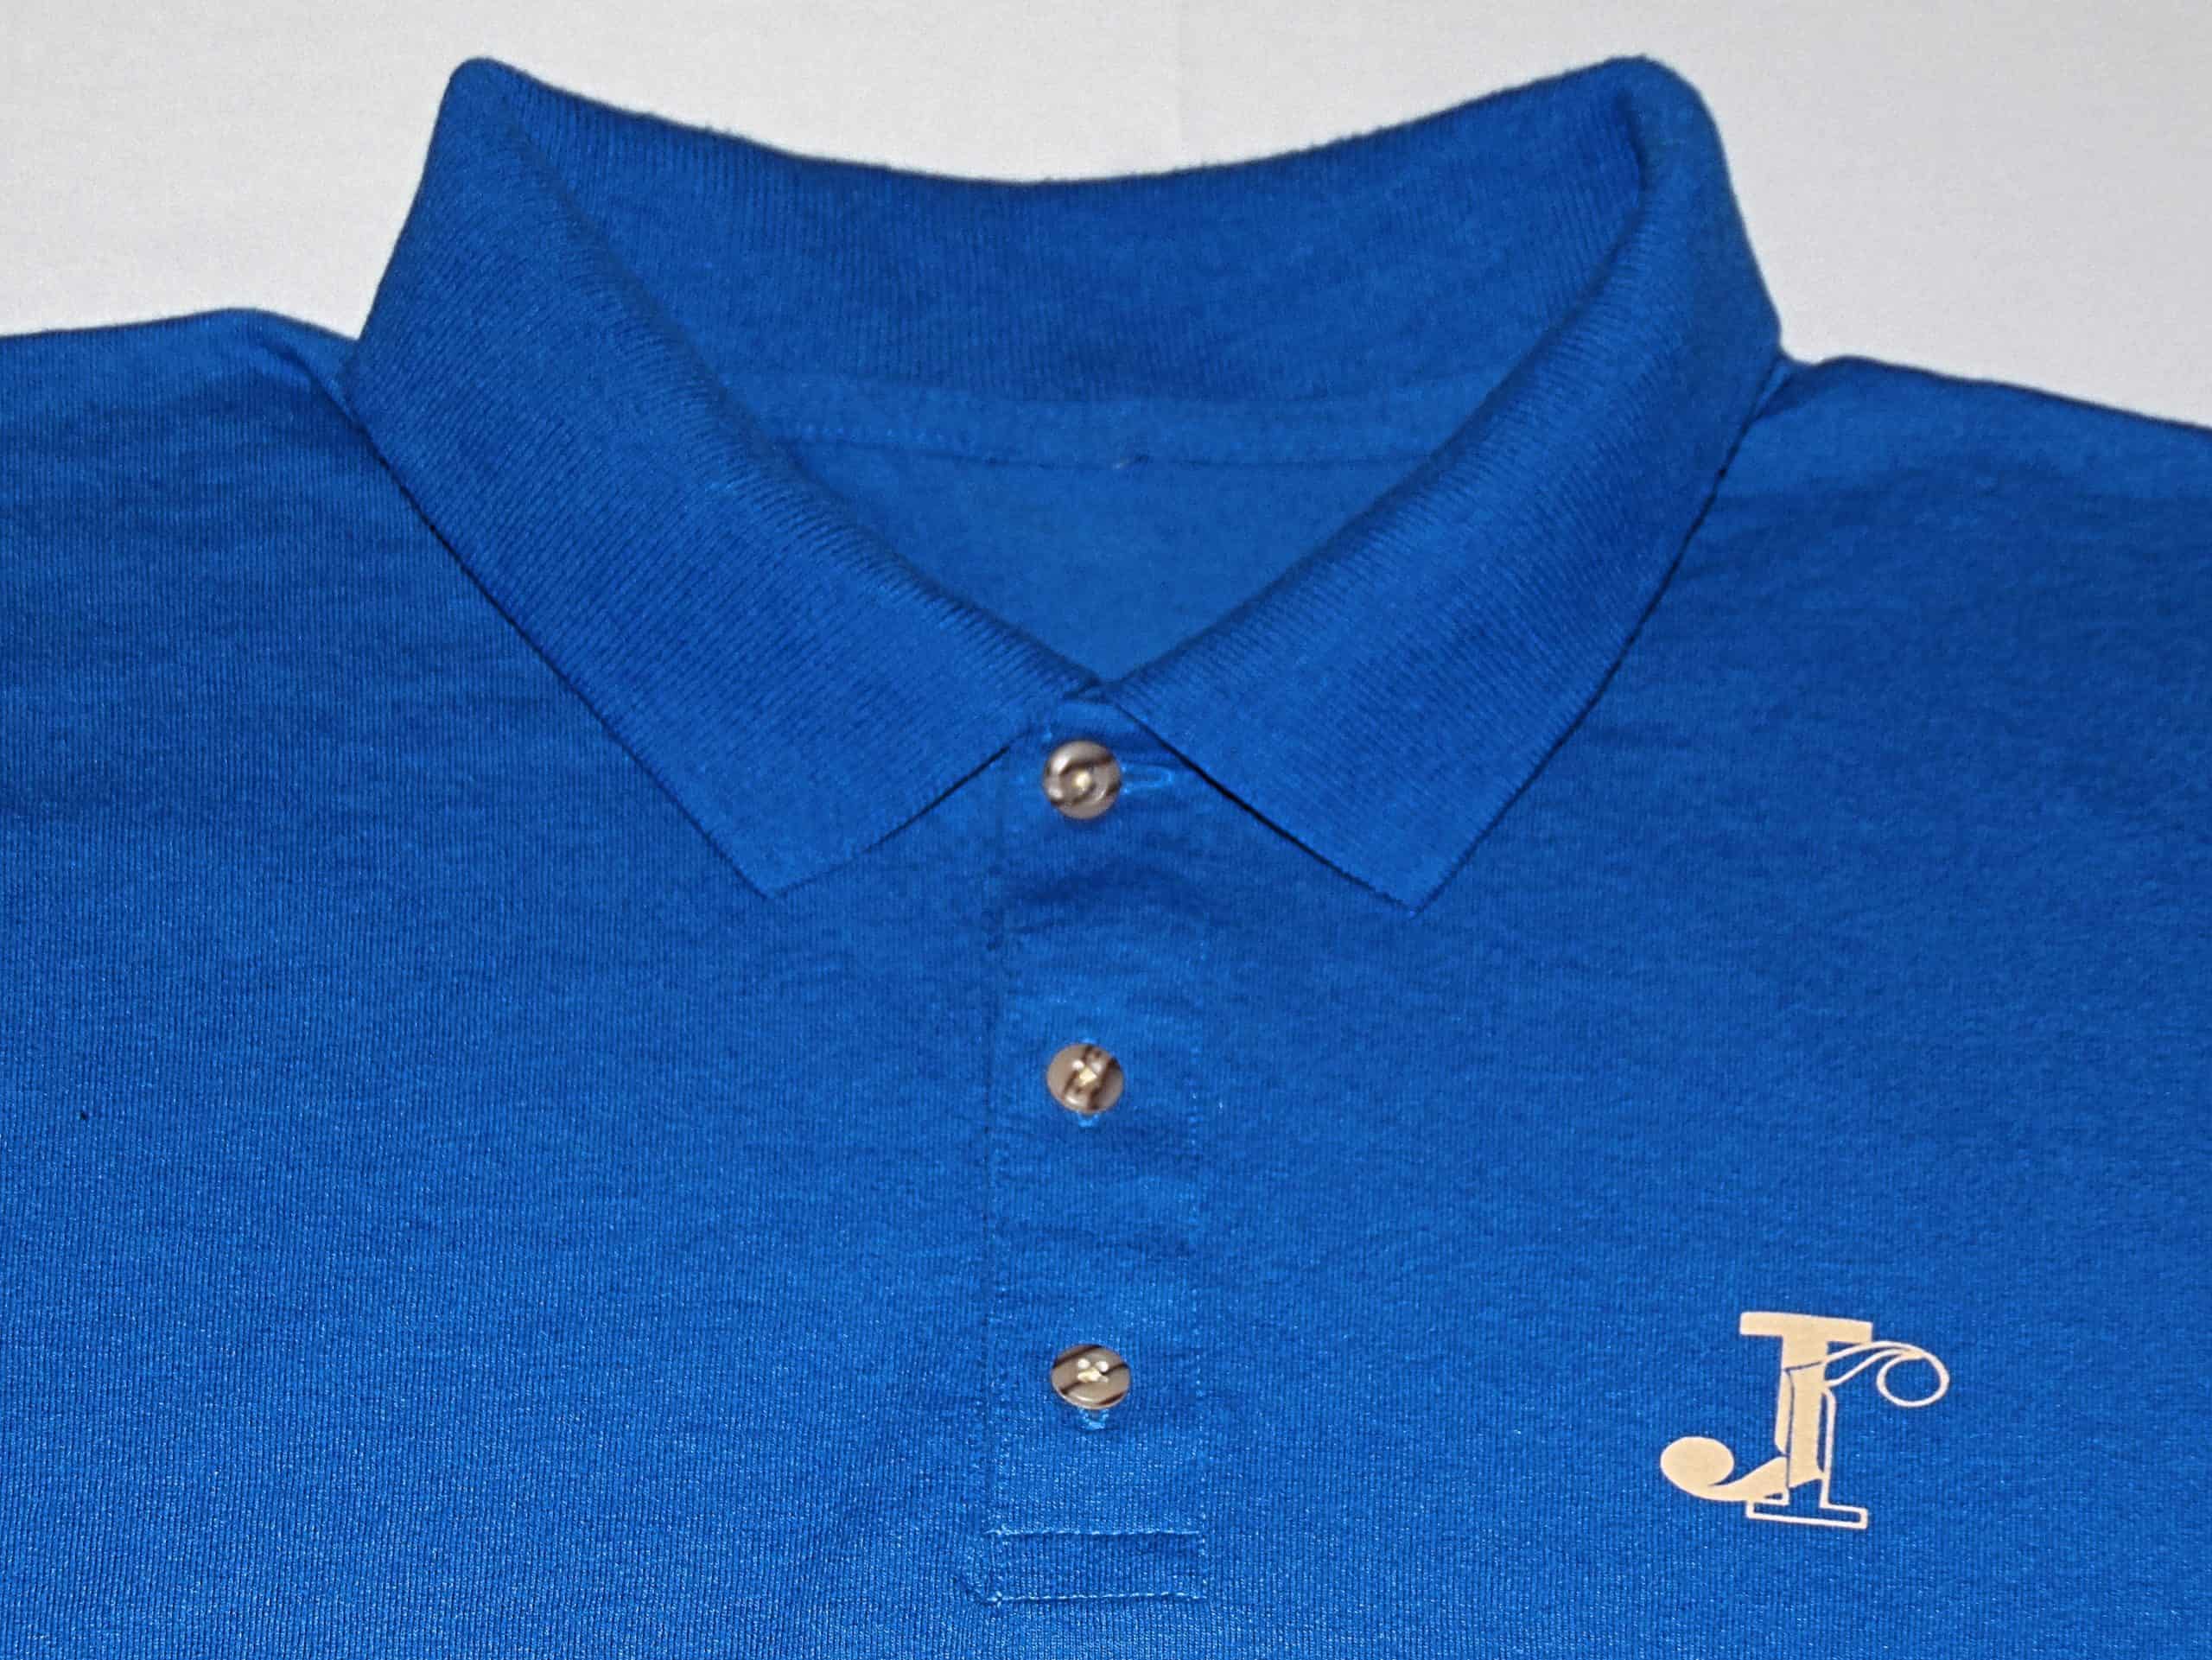 Jean-Jacques Classic Polo, Royal Blue